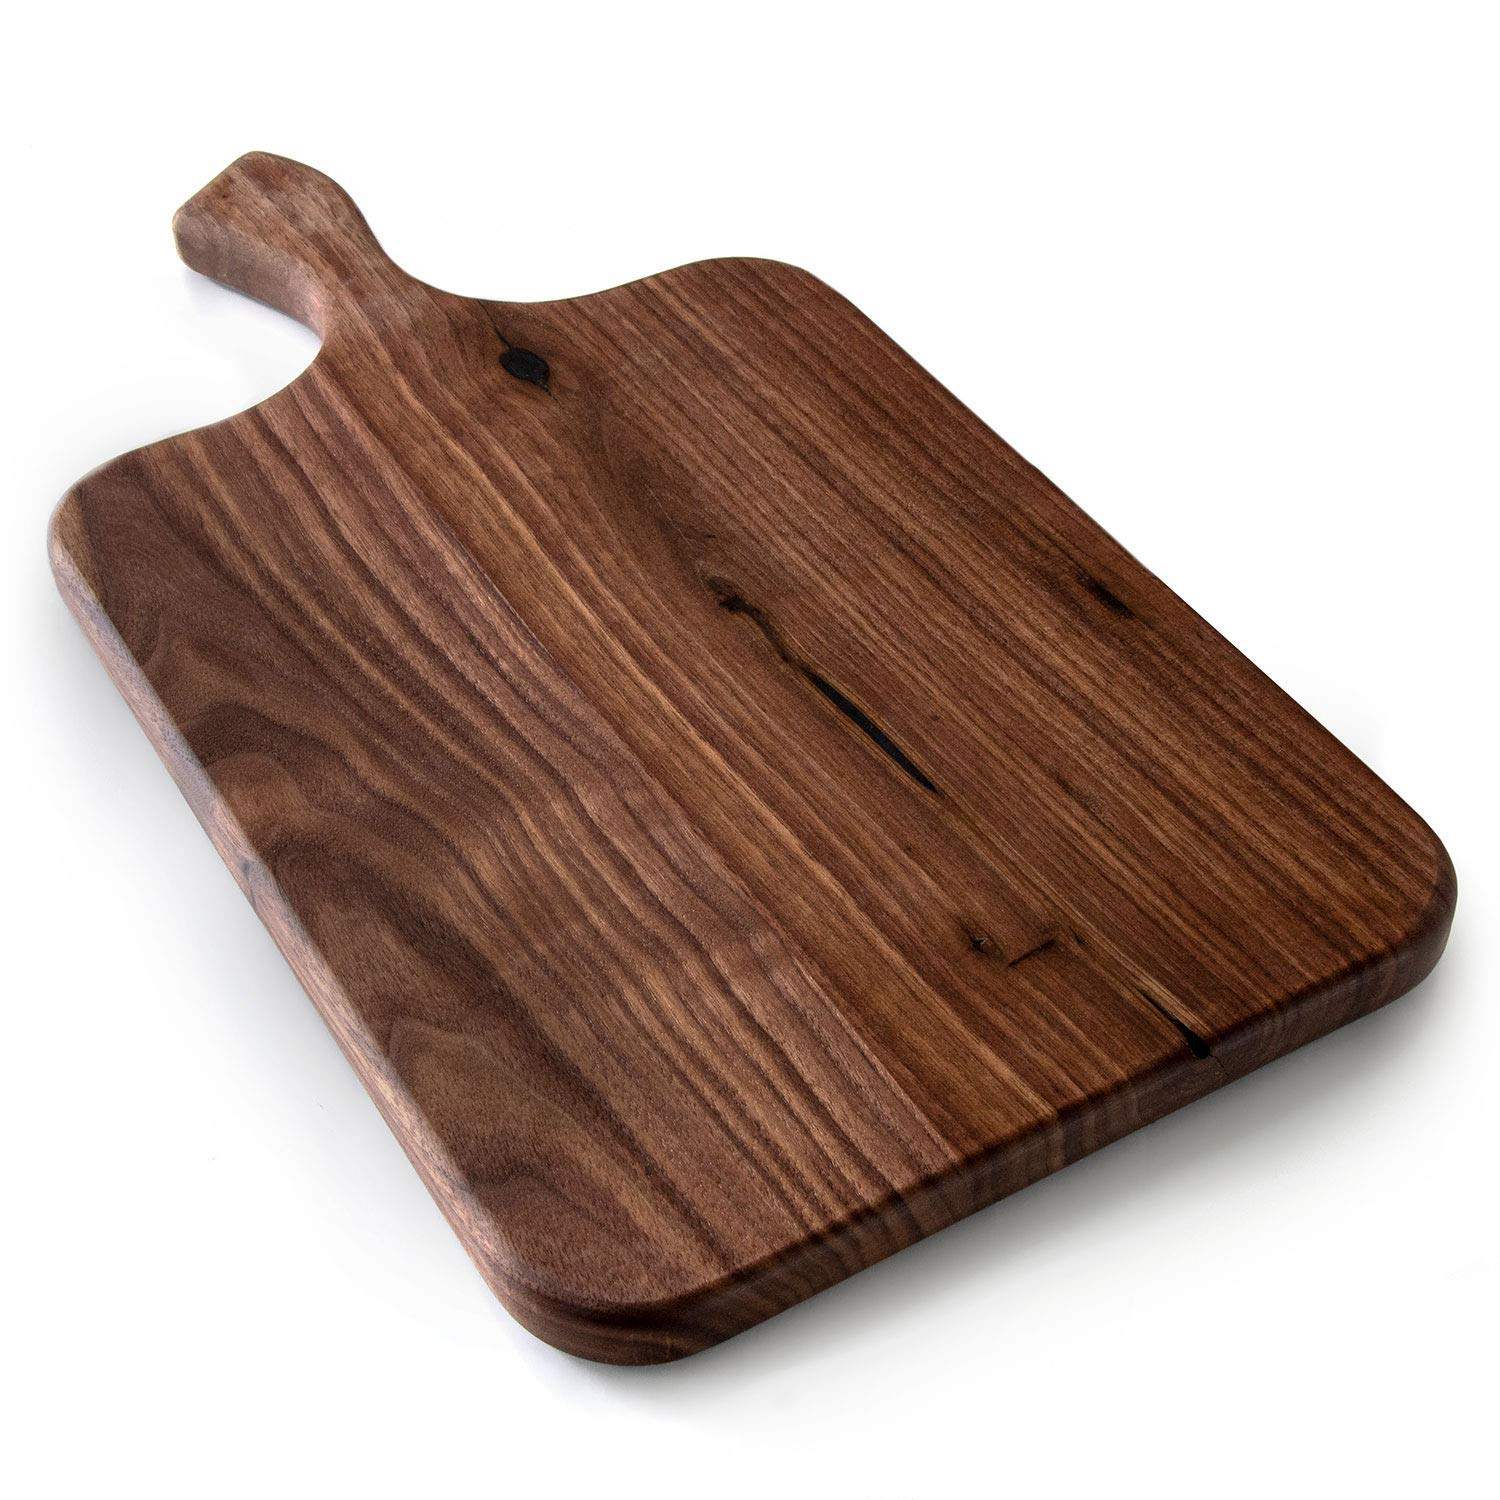 Shangrun Home Organic Wood Cutting Board For Kitchen